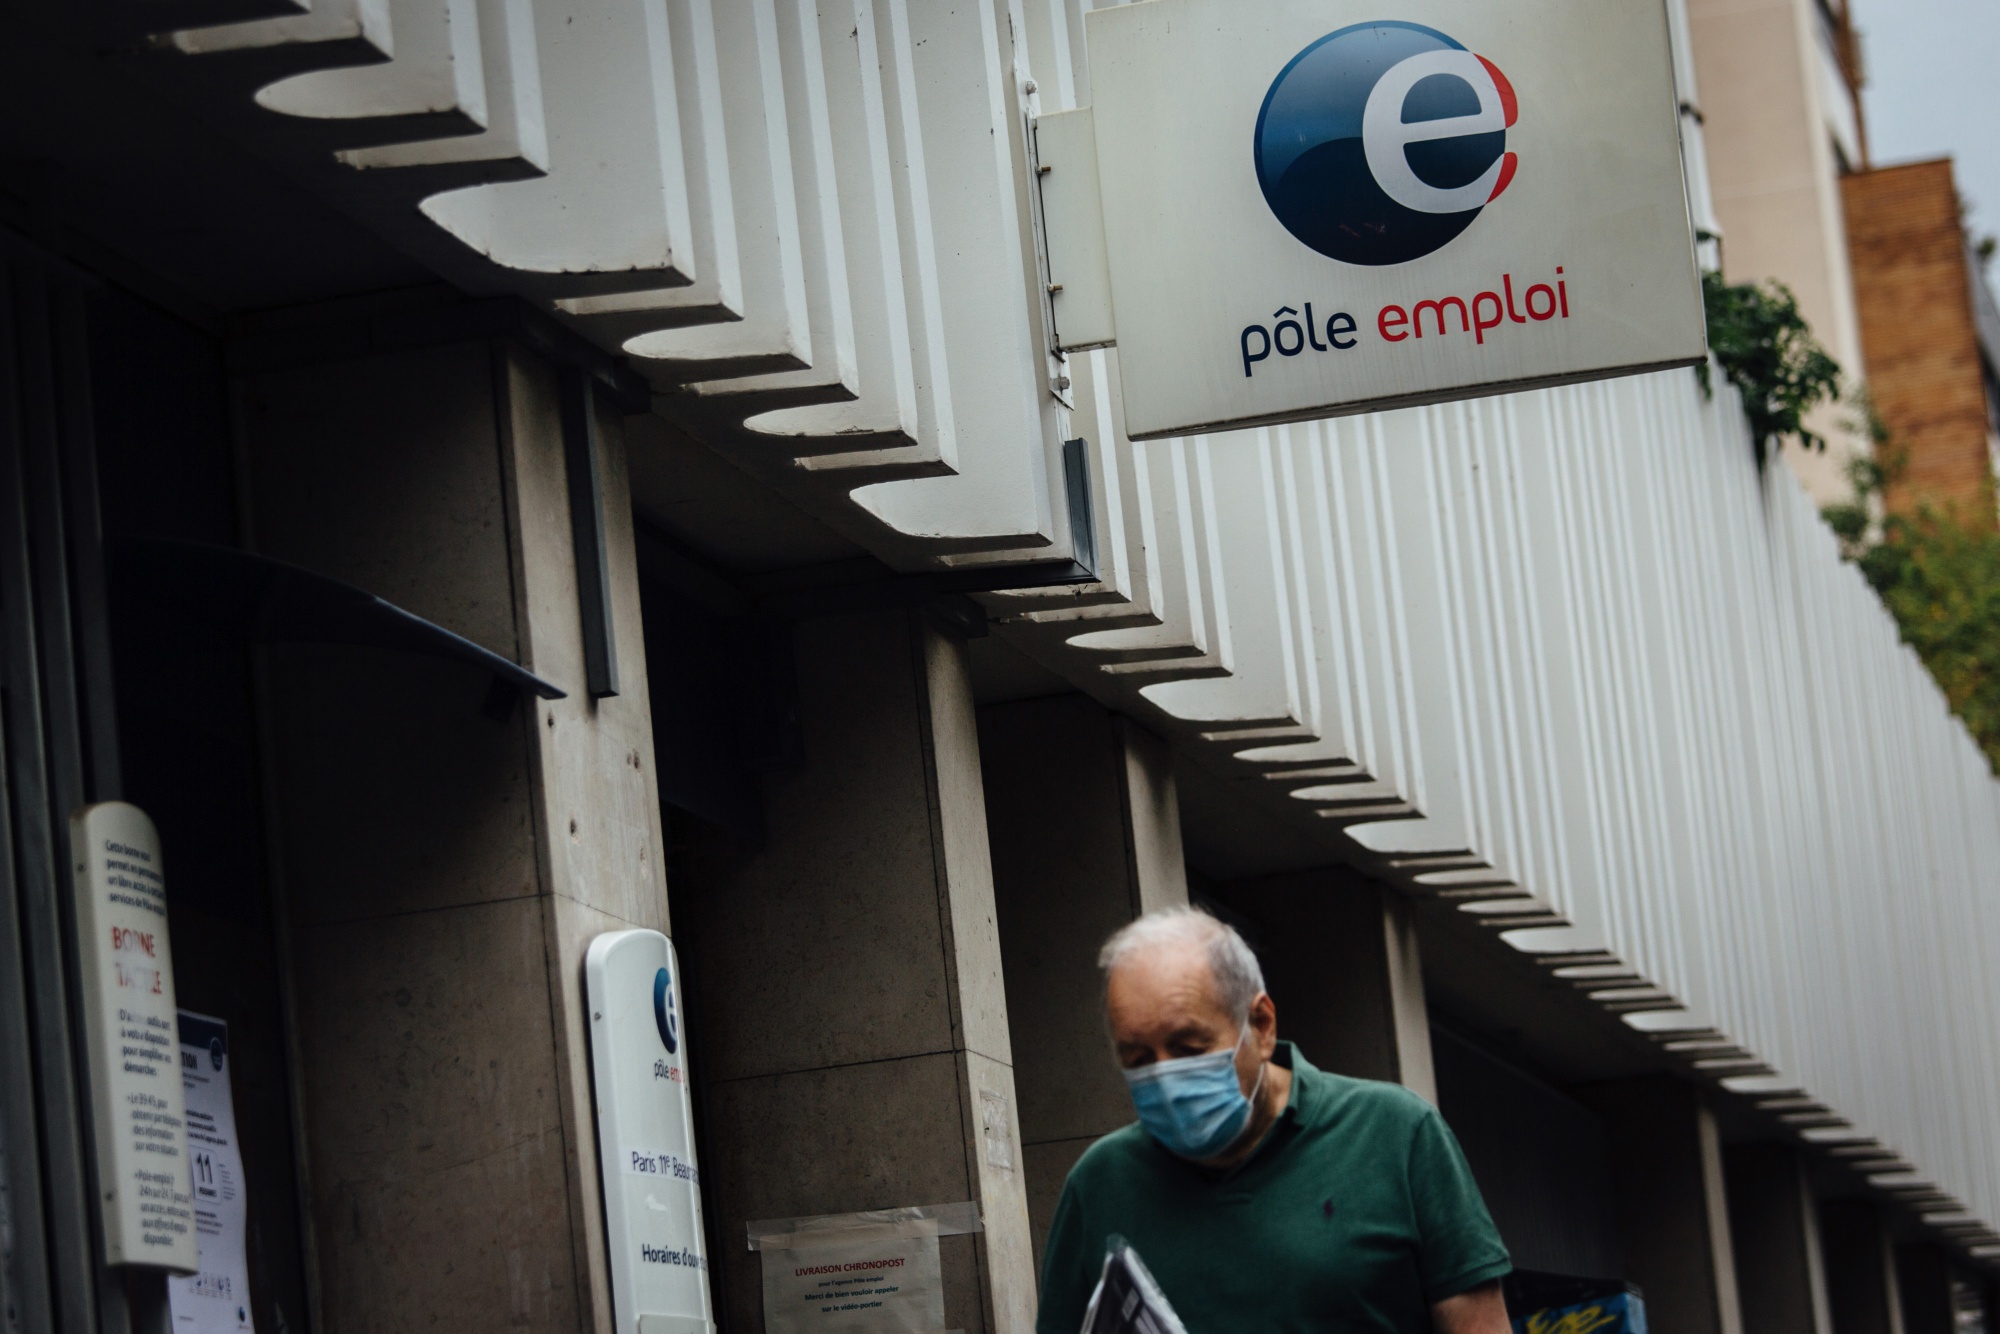 A pedestrian&nbsp;passes a Pole Emploi job center in Paris.